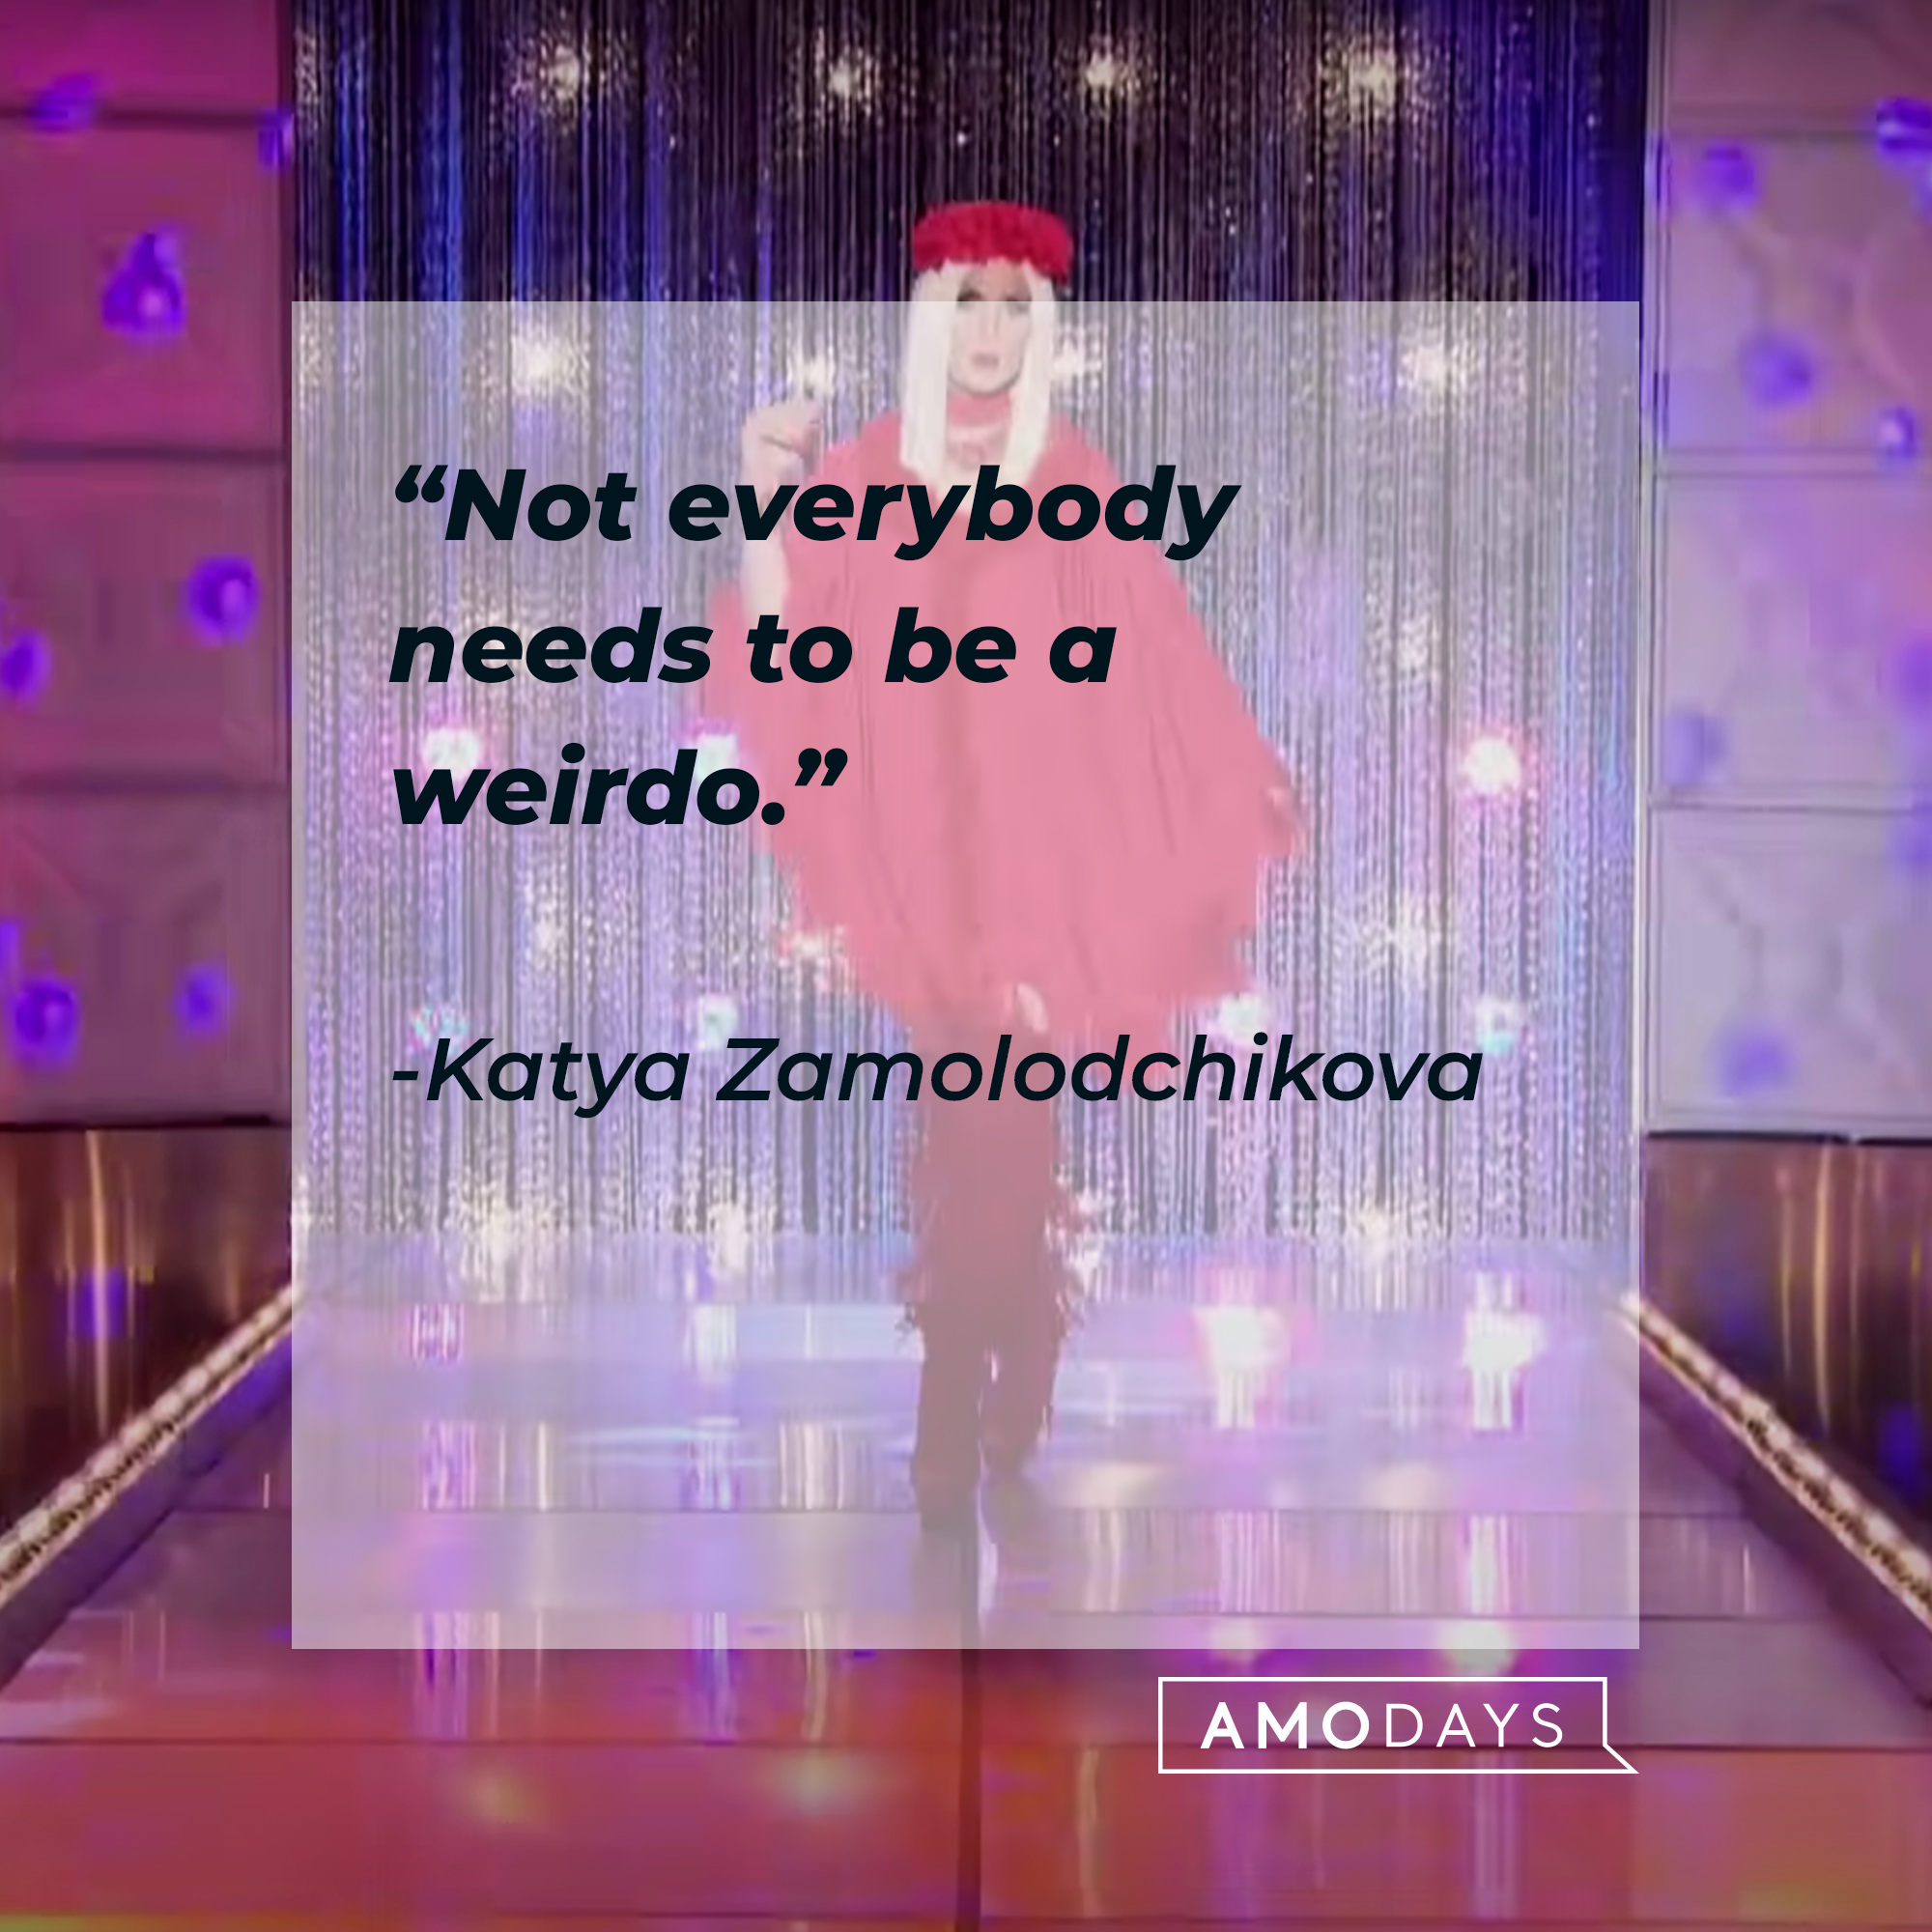 Katya Zamolodchikova, with her quote: “Not everybody needs to be a weirdo.” | Source: youtube.com/rupaulsdragrace